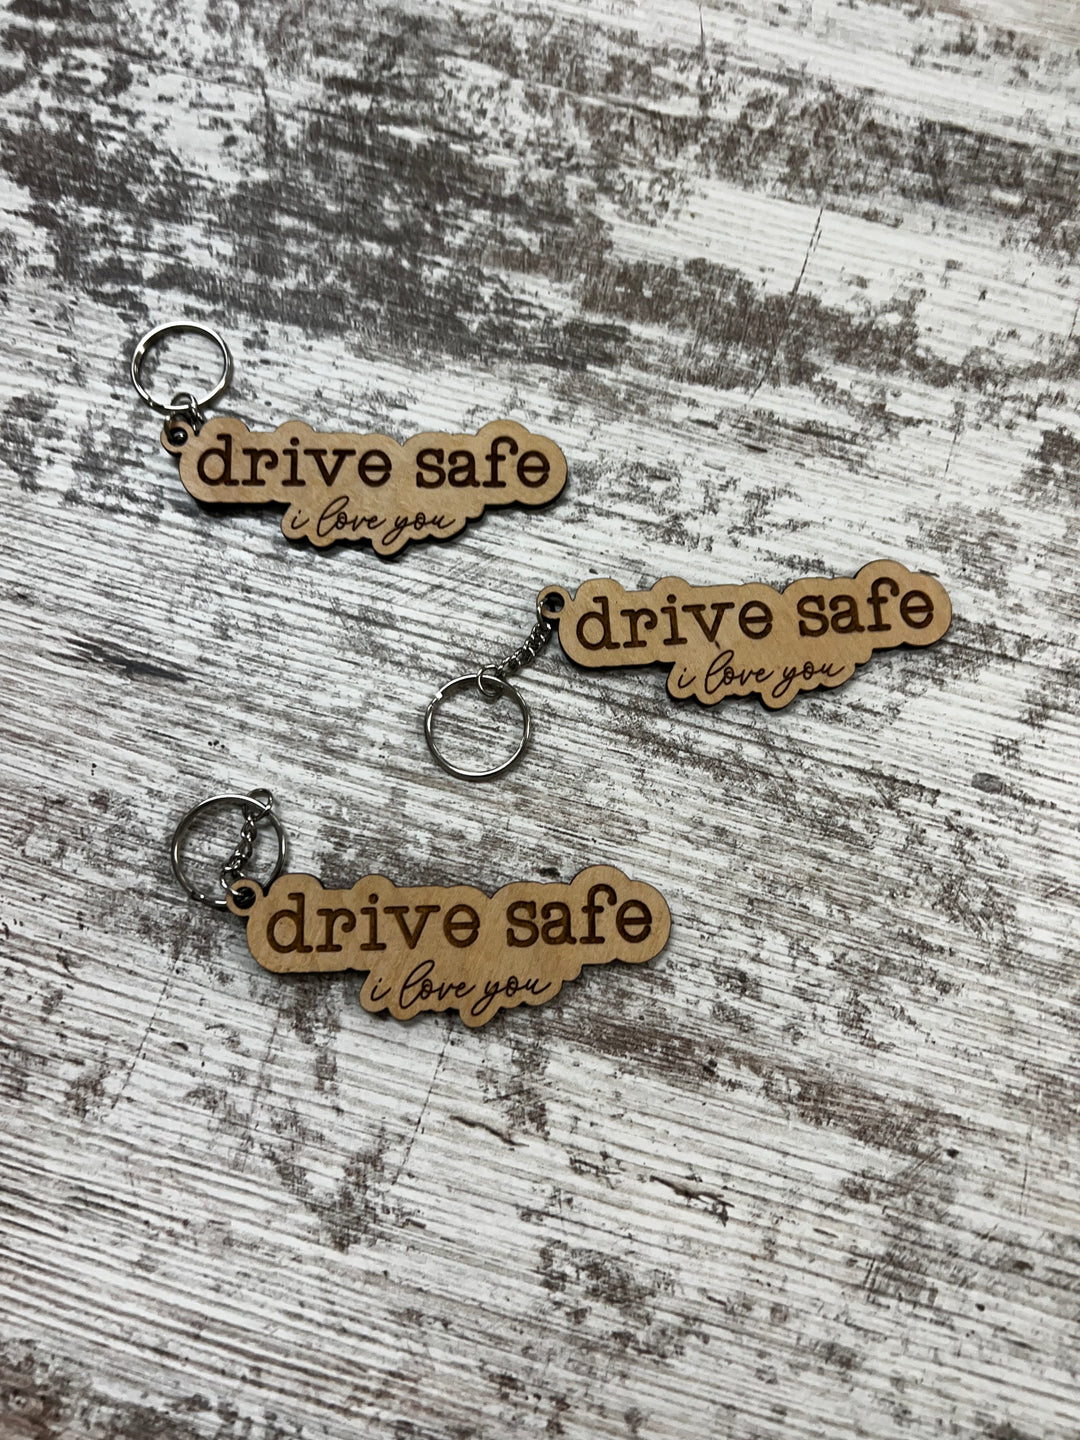 Drive Safe I Love You Keychain